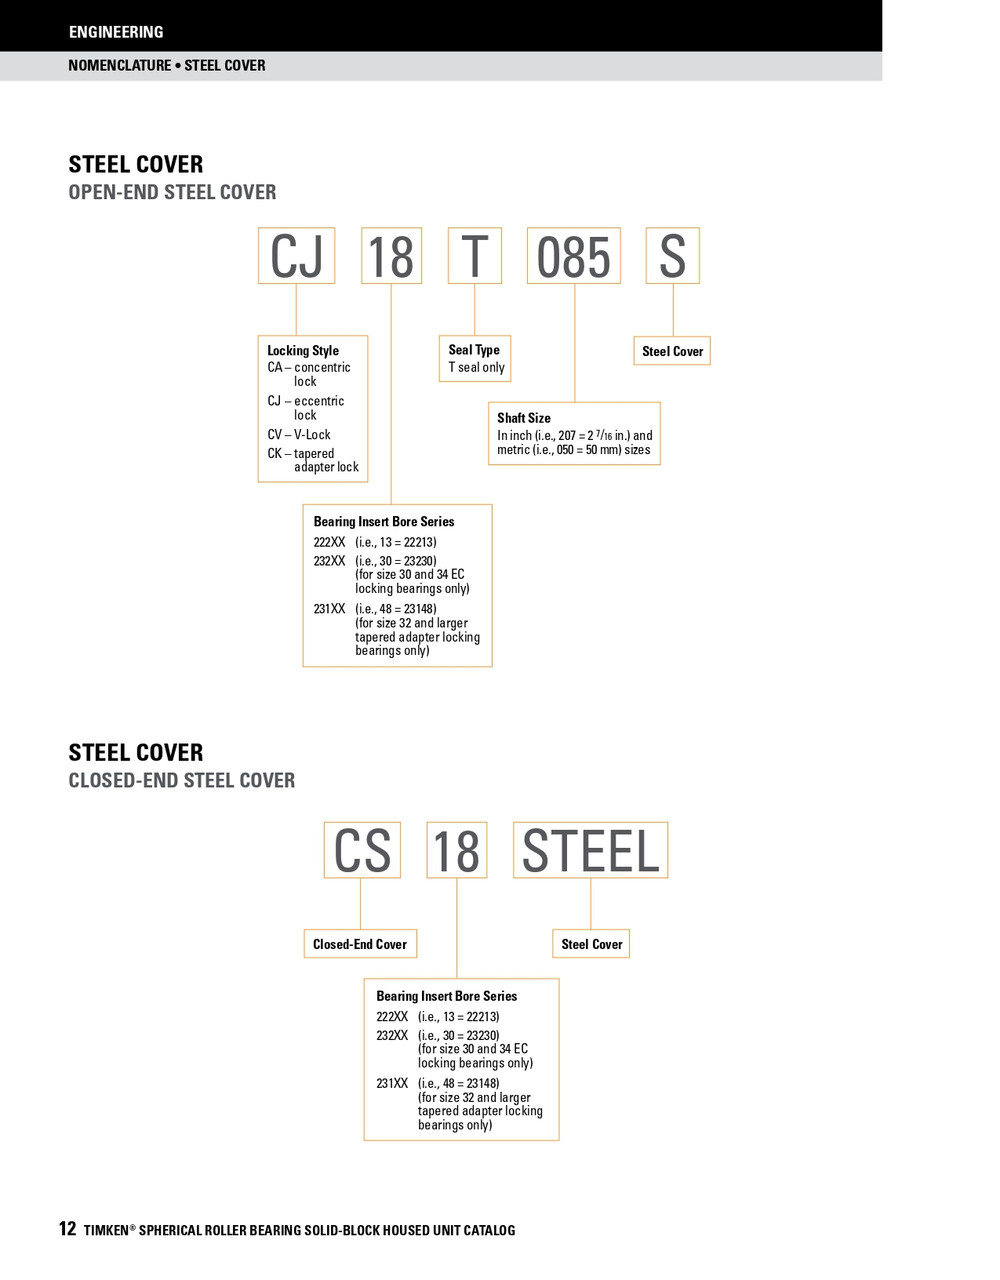 2-11/16" Timken SRB Steel Open End Cover w/Teflon Seal - QA Concentric Lock Type  CA15T211S